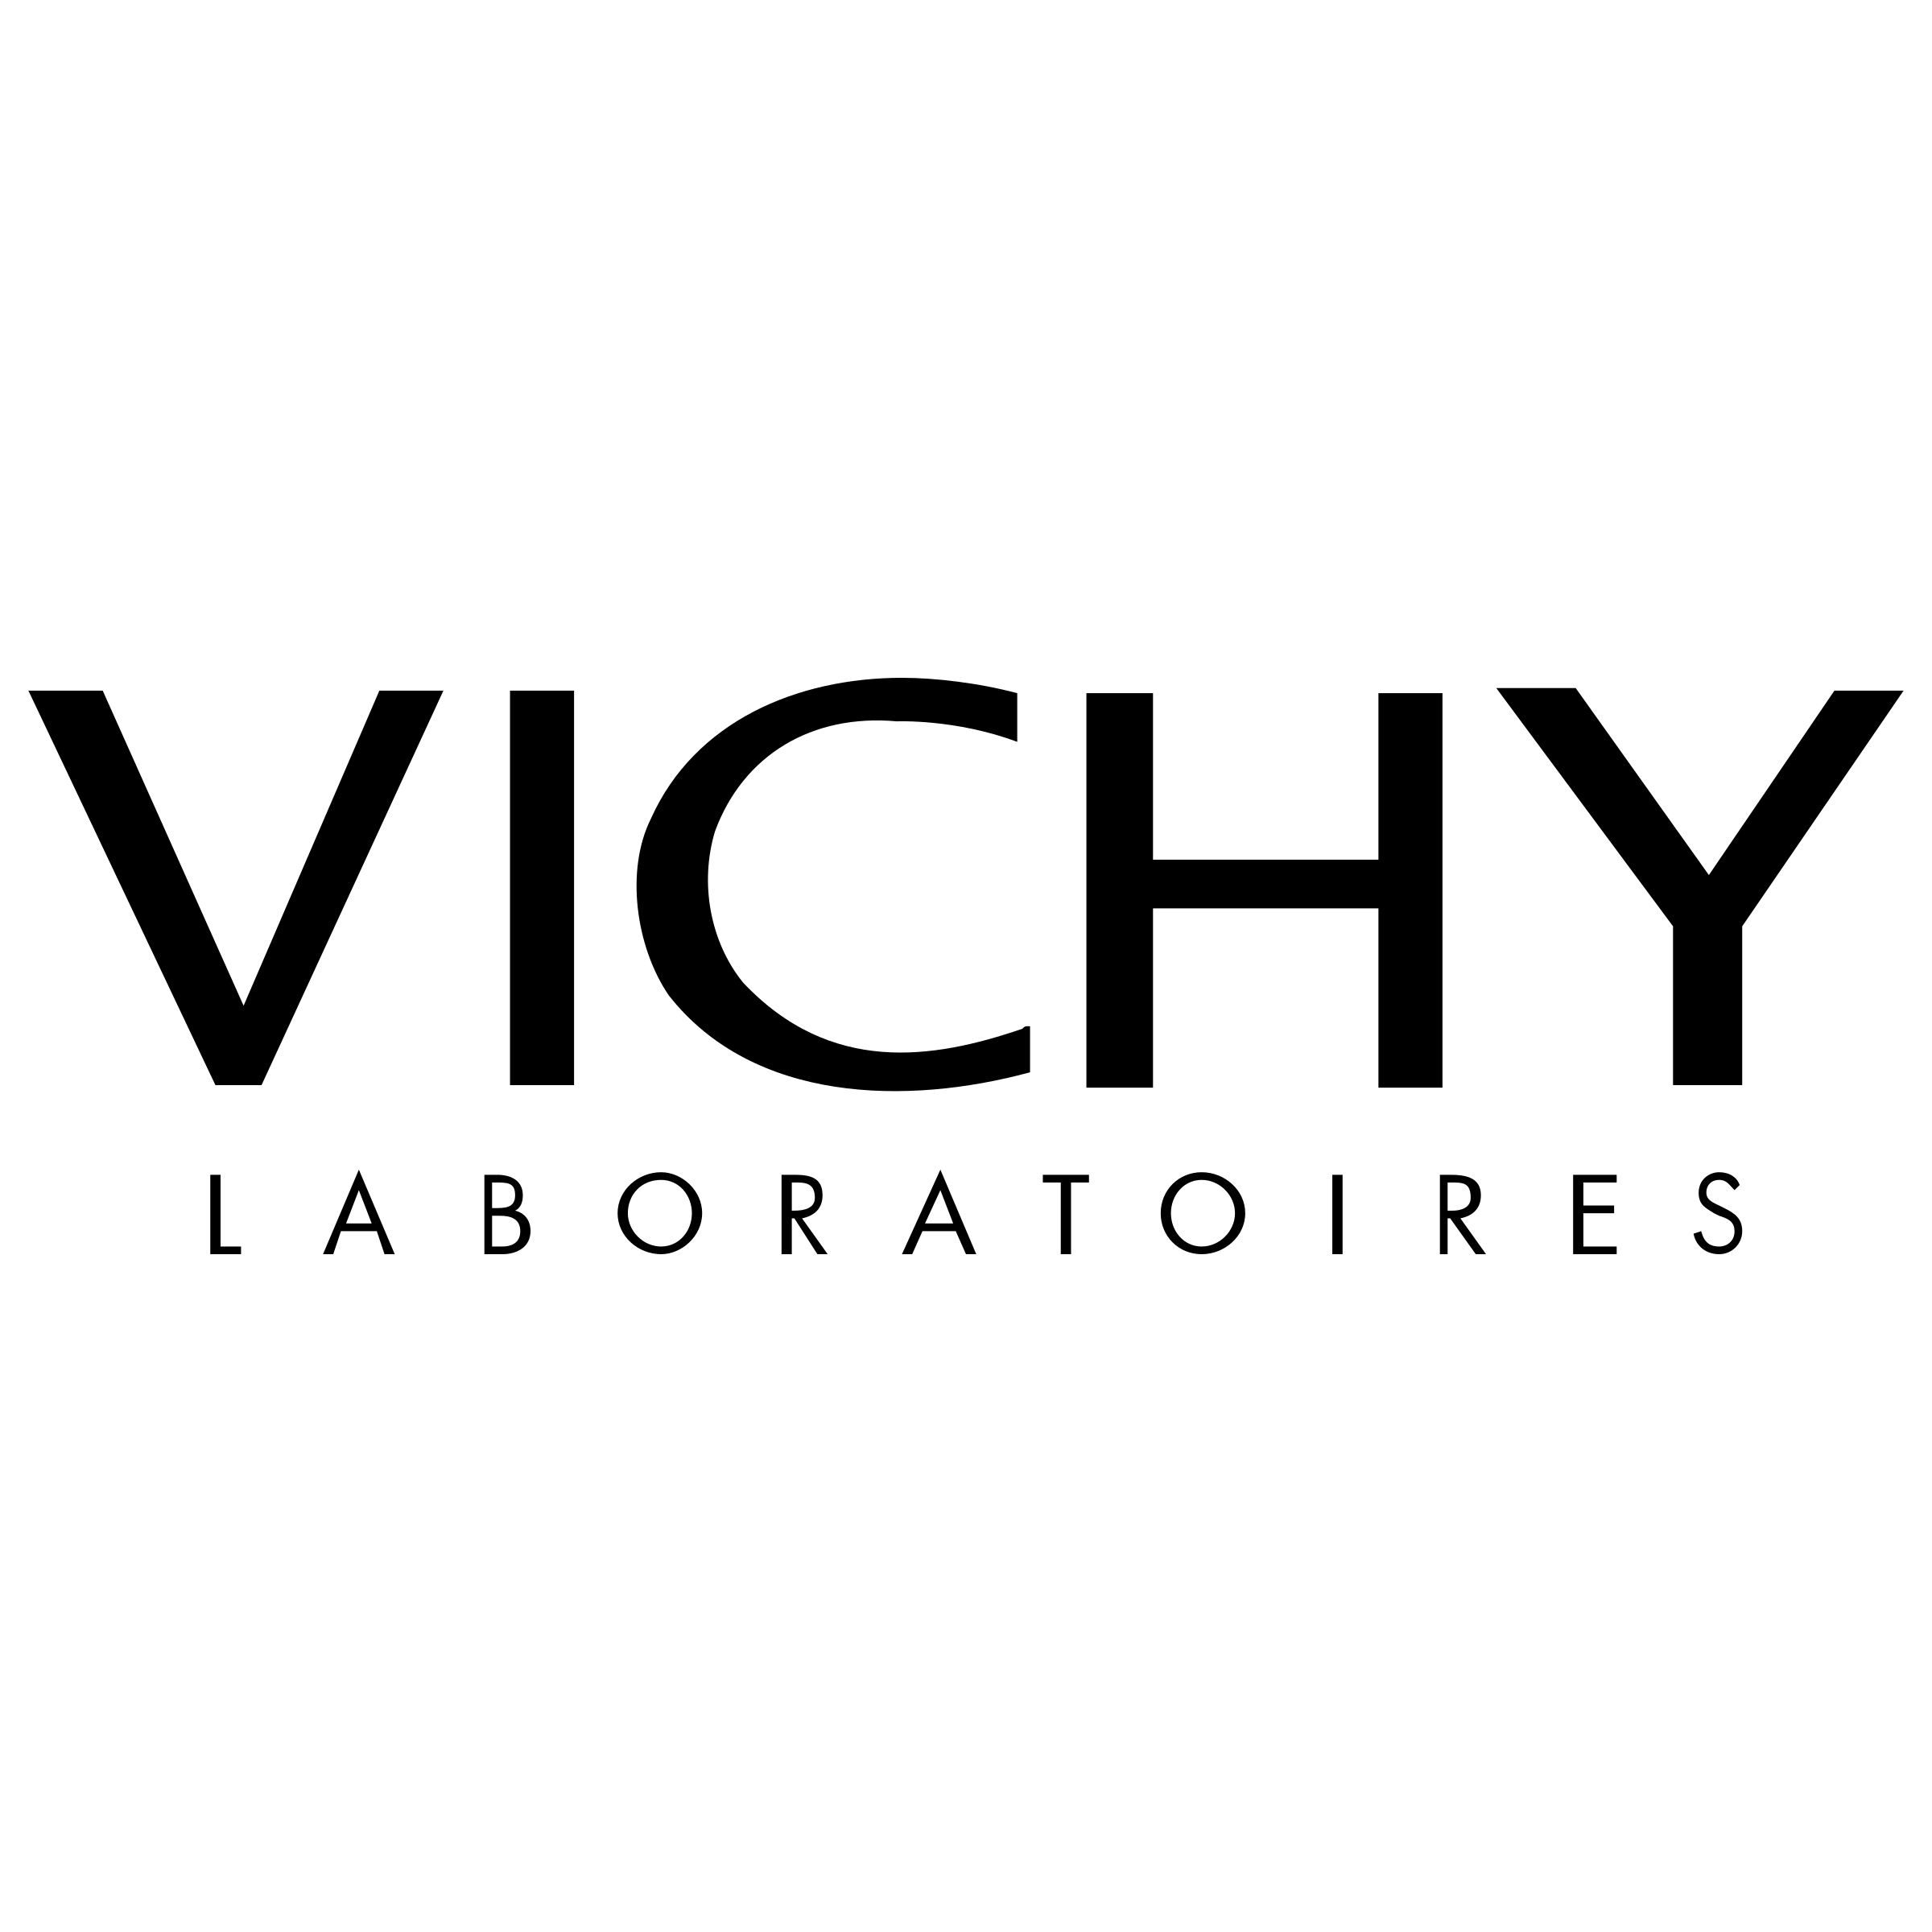 vichy-1-logo-png-transparent